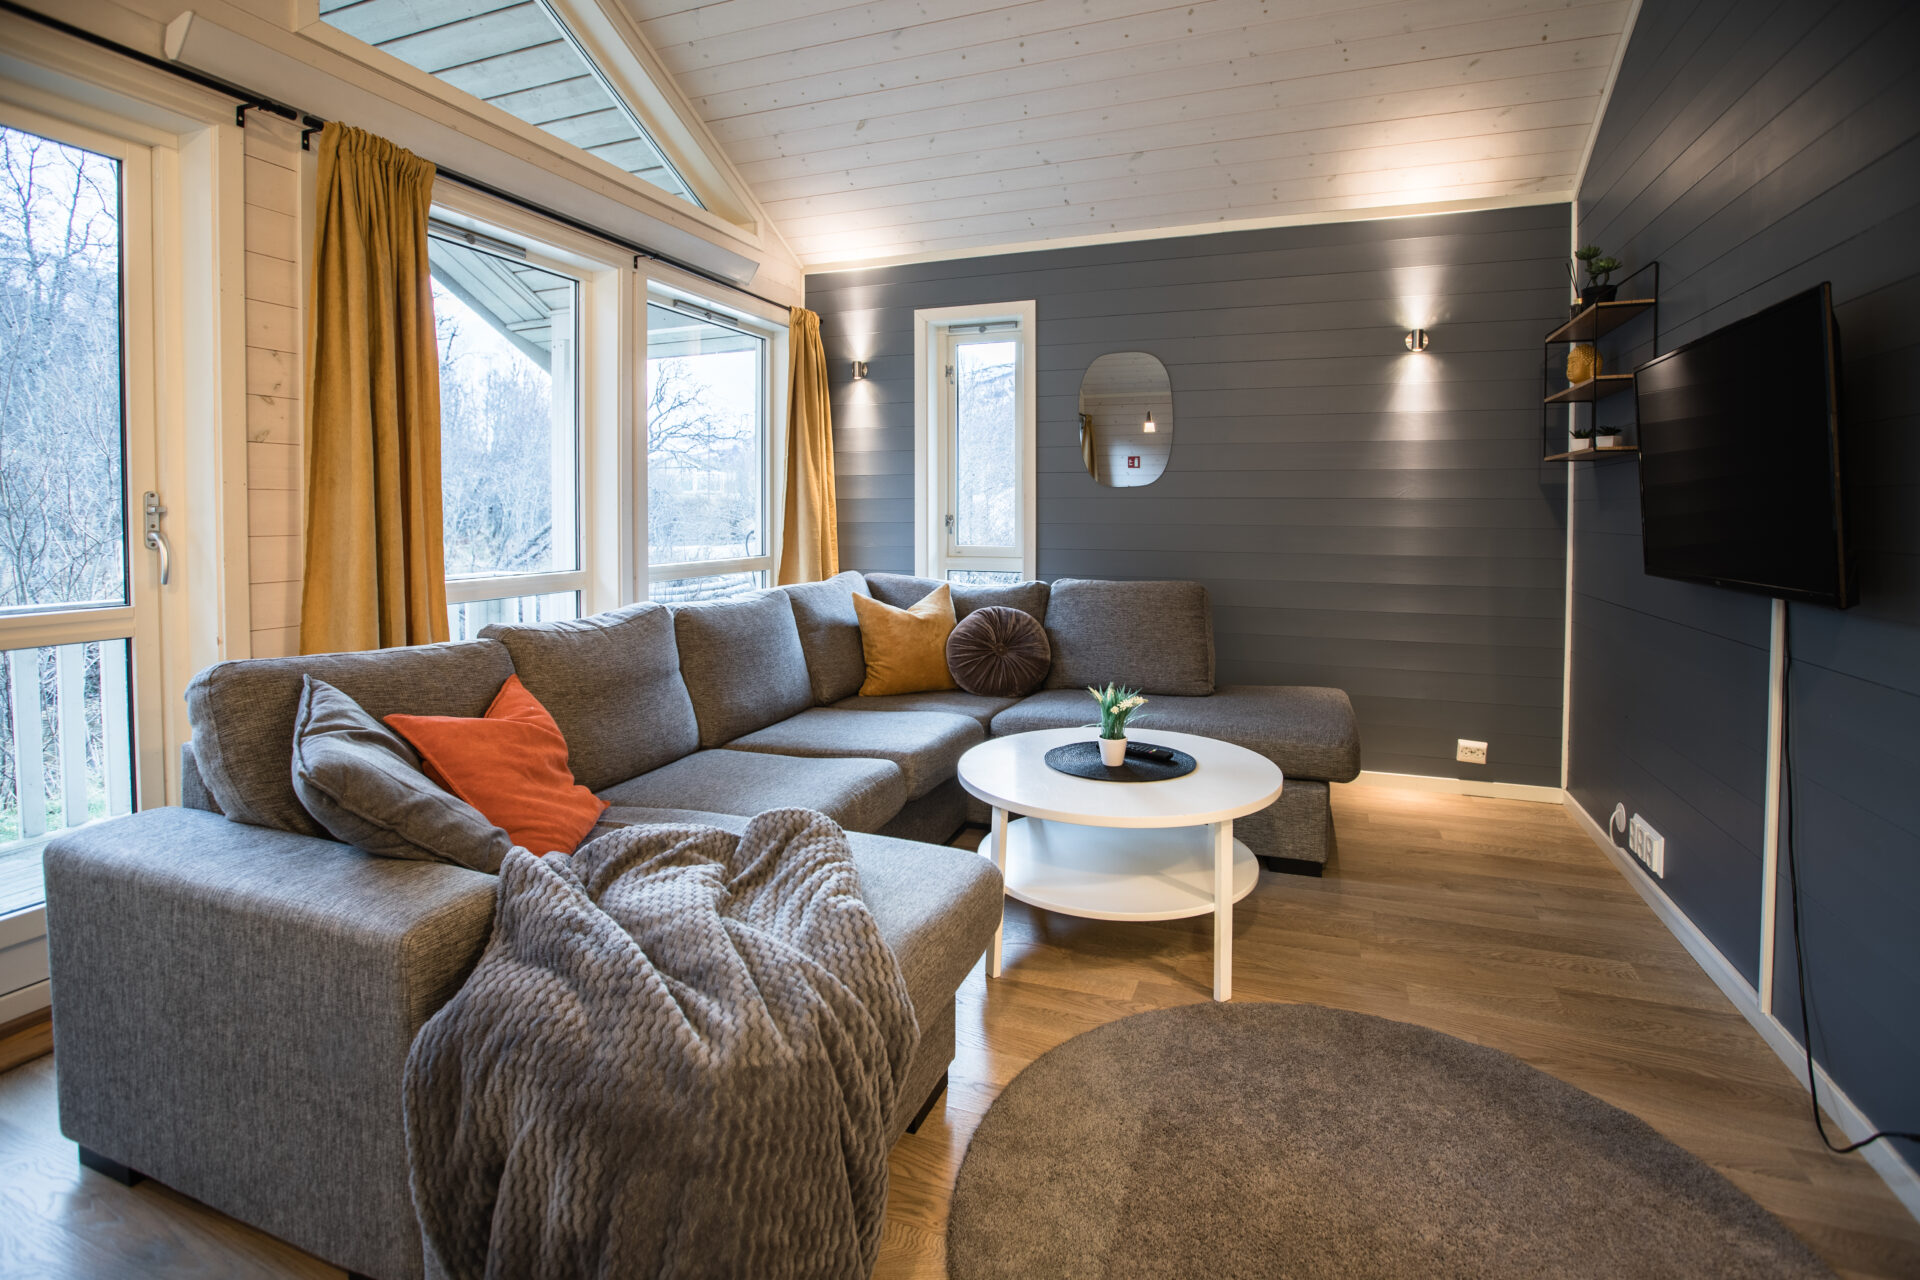 Tromsø Camping Deluxe - of high standard